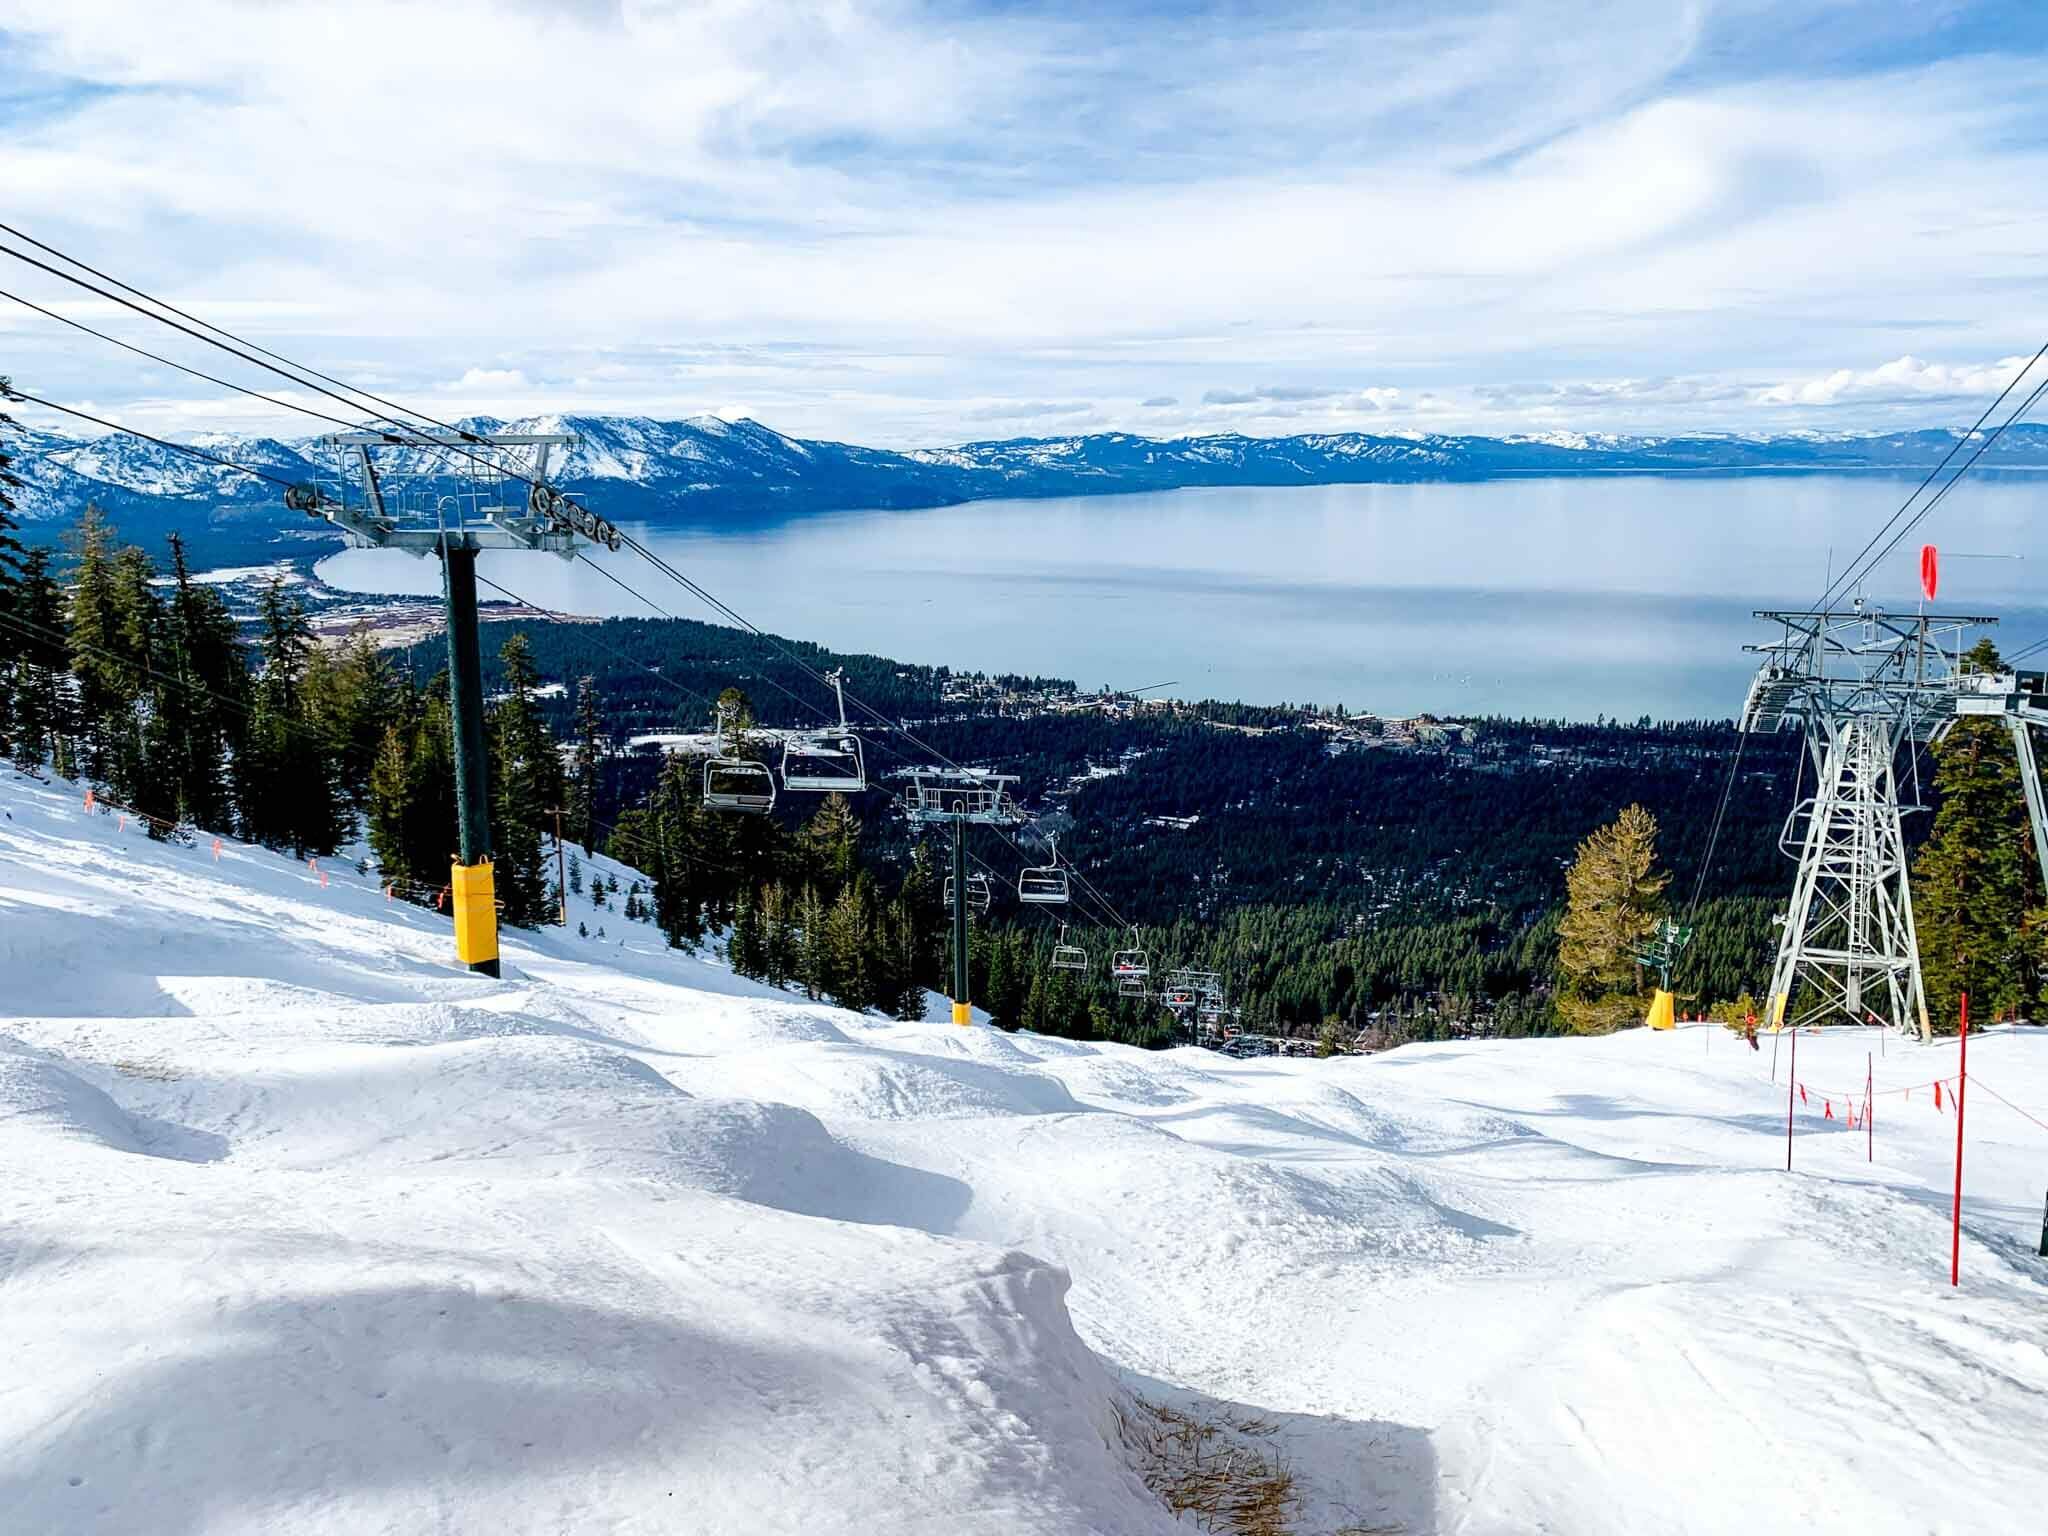 heavenly-ski-resort-lake-tahoe-usa-05.jpg